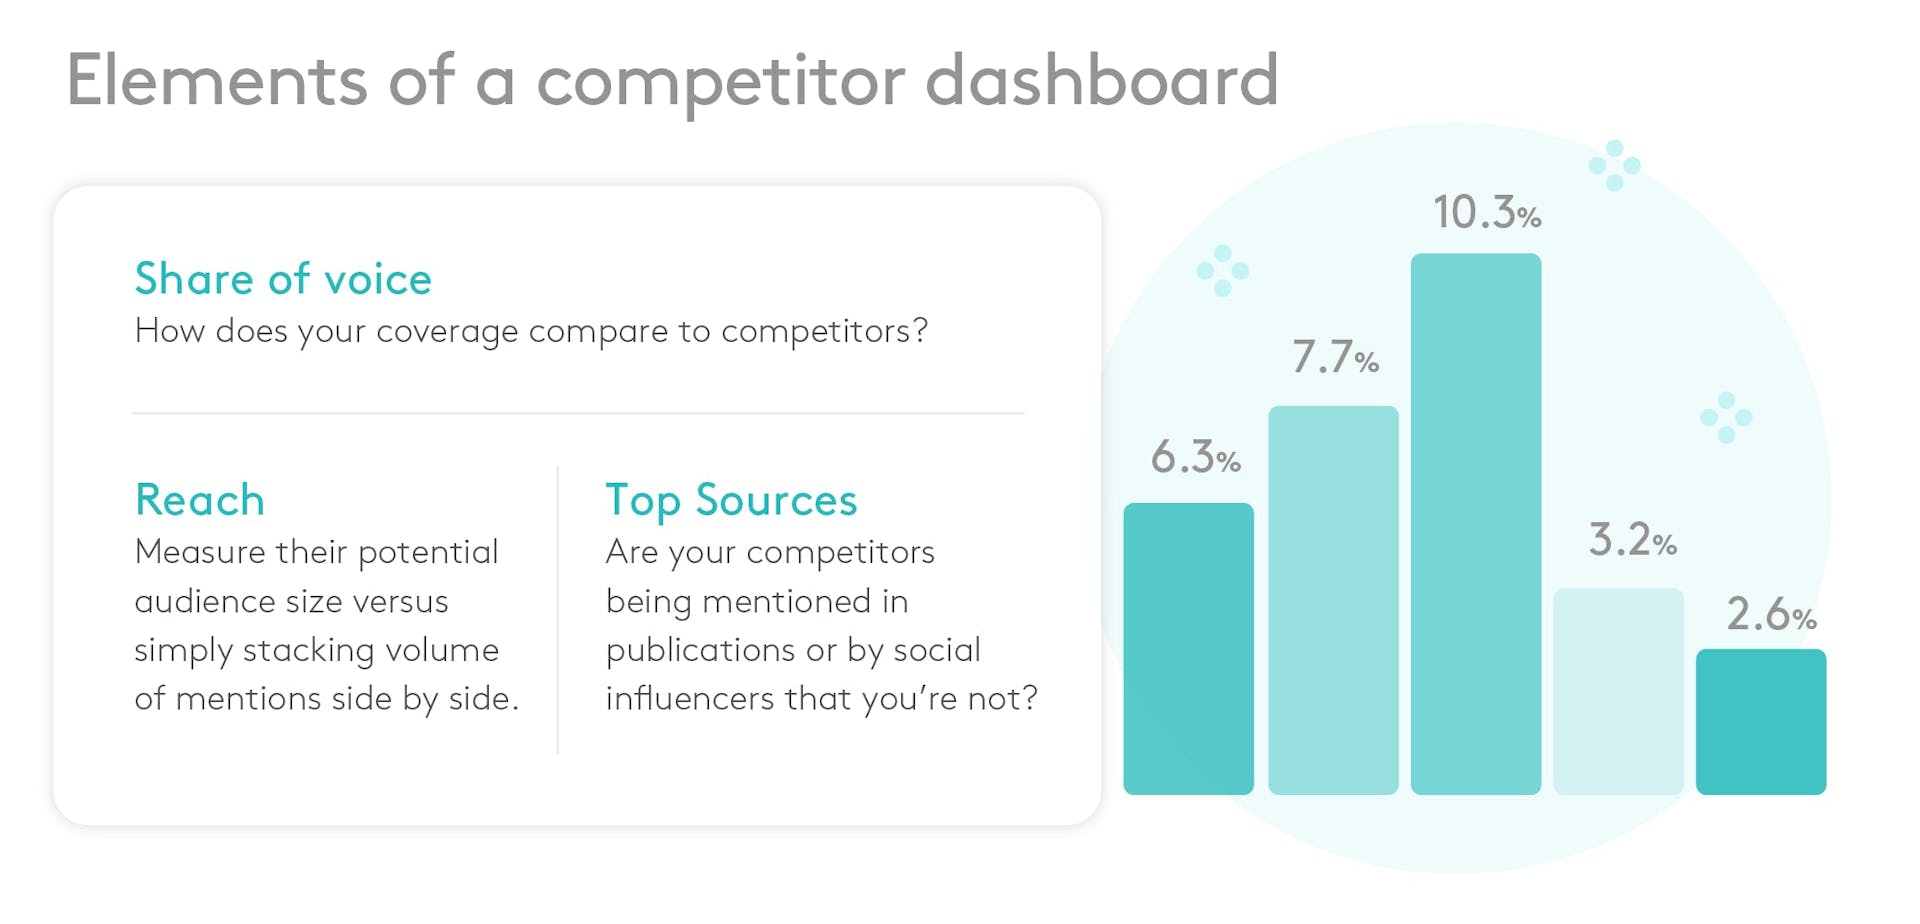 Een competitive dashboard dat competitive benchmarking rapporteert